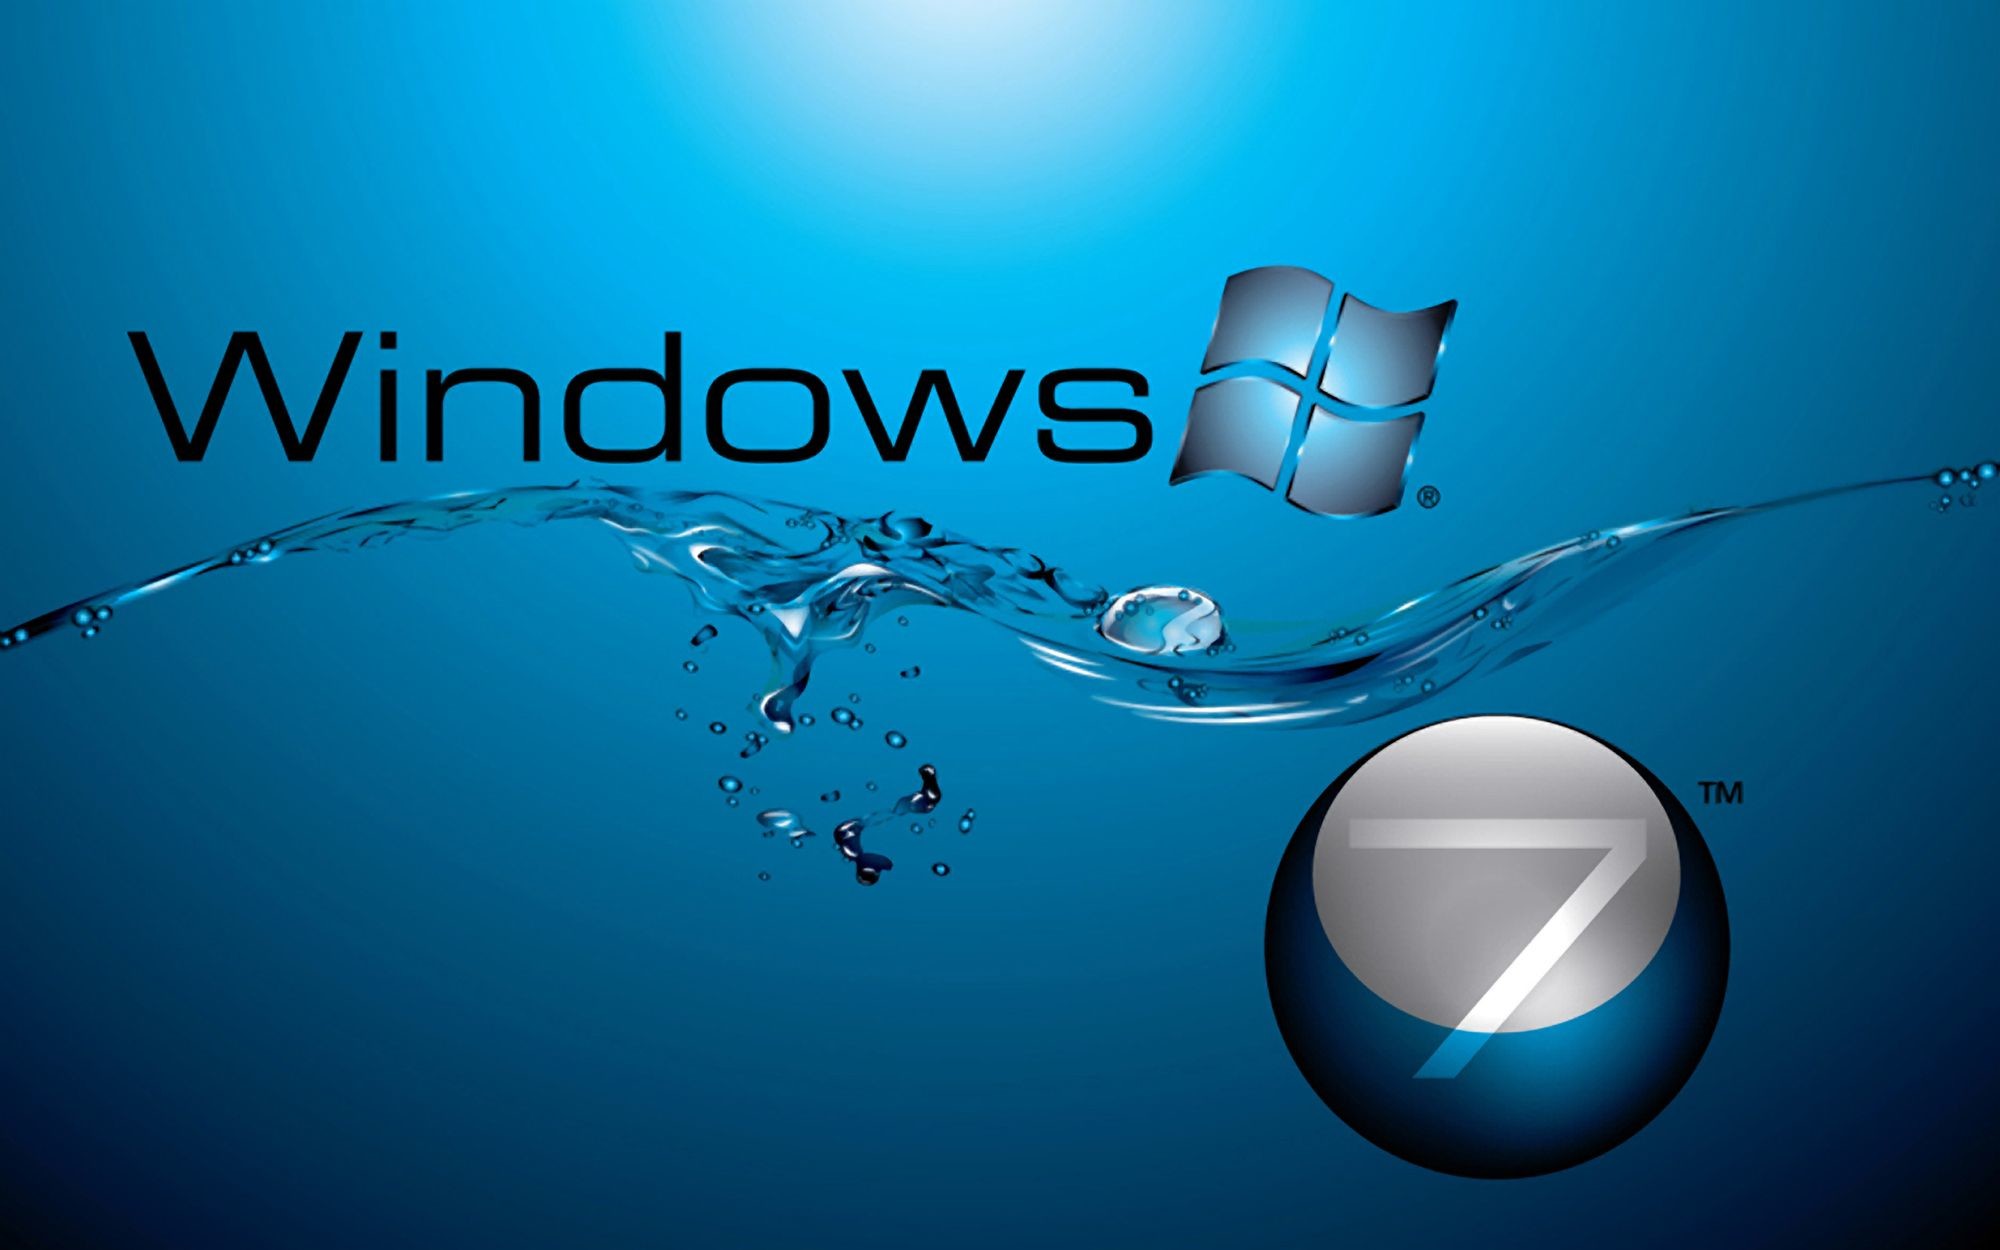 Windows 7 Background Desktop 62 images 2000x1250